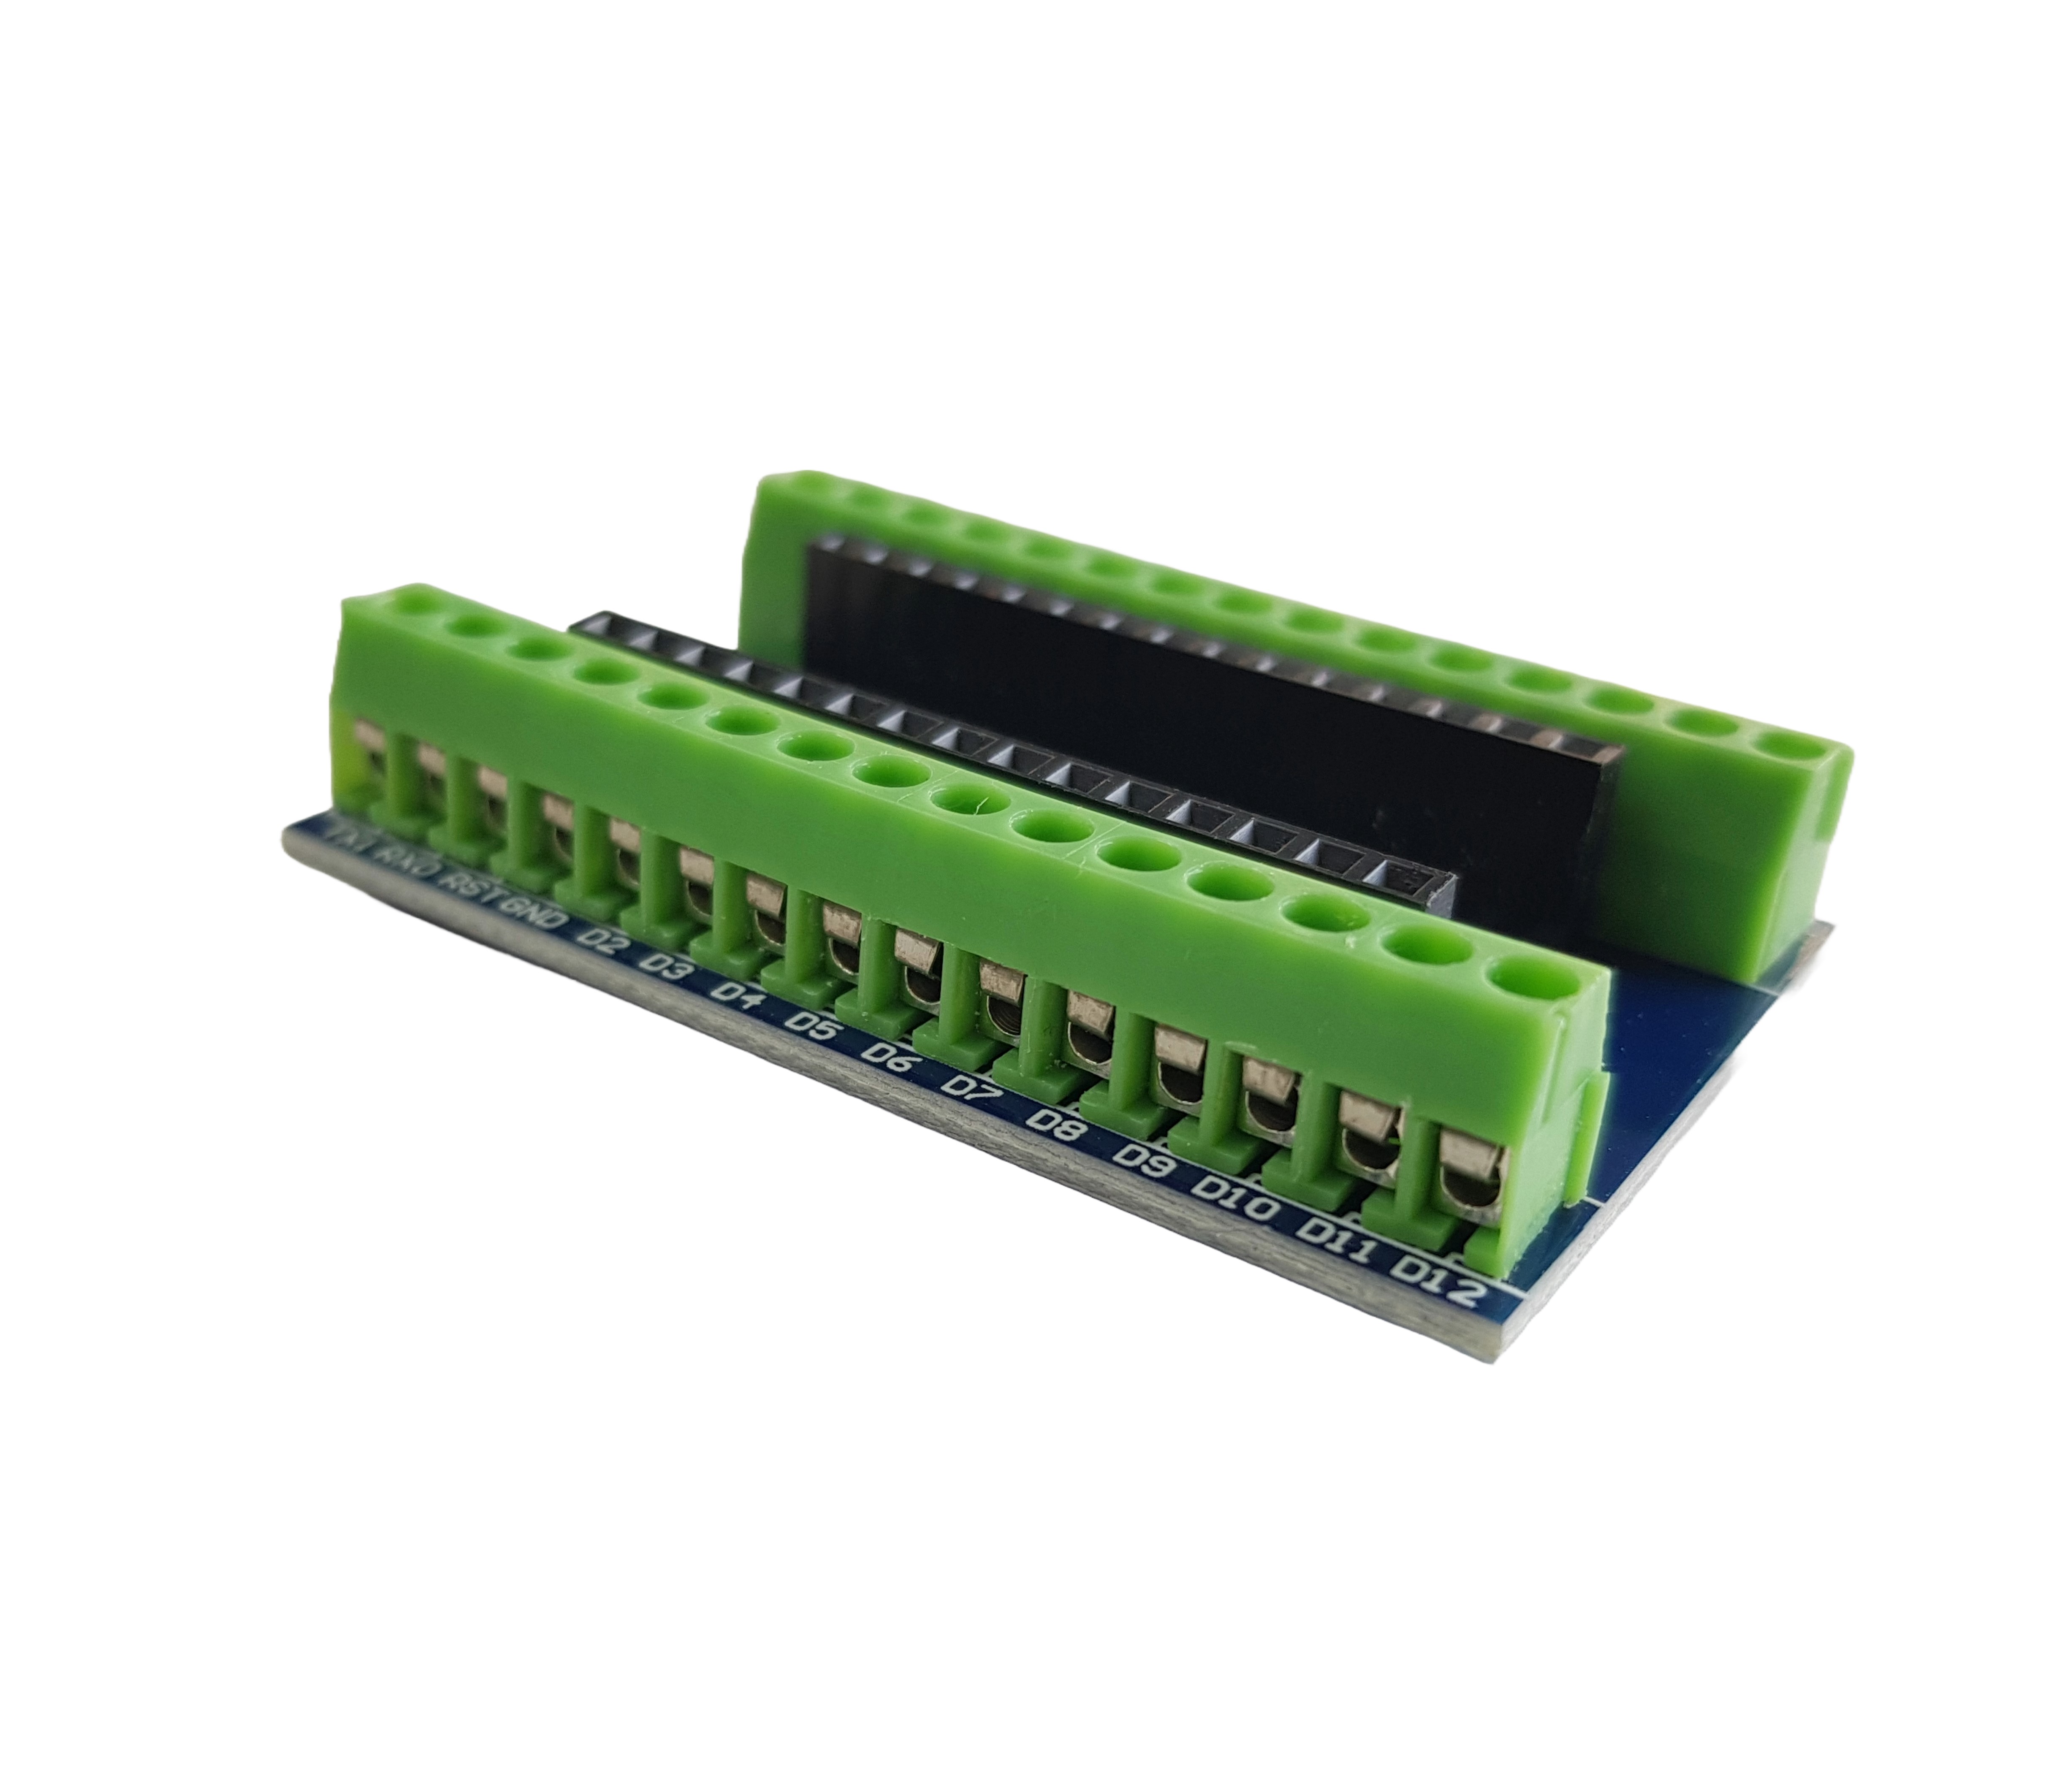 Screw Terminal Block Shield Expansion Board for Arduino Nano